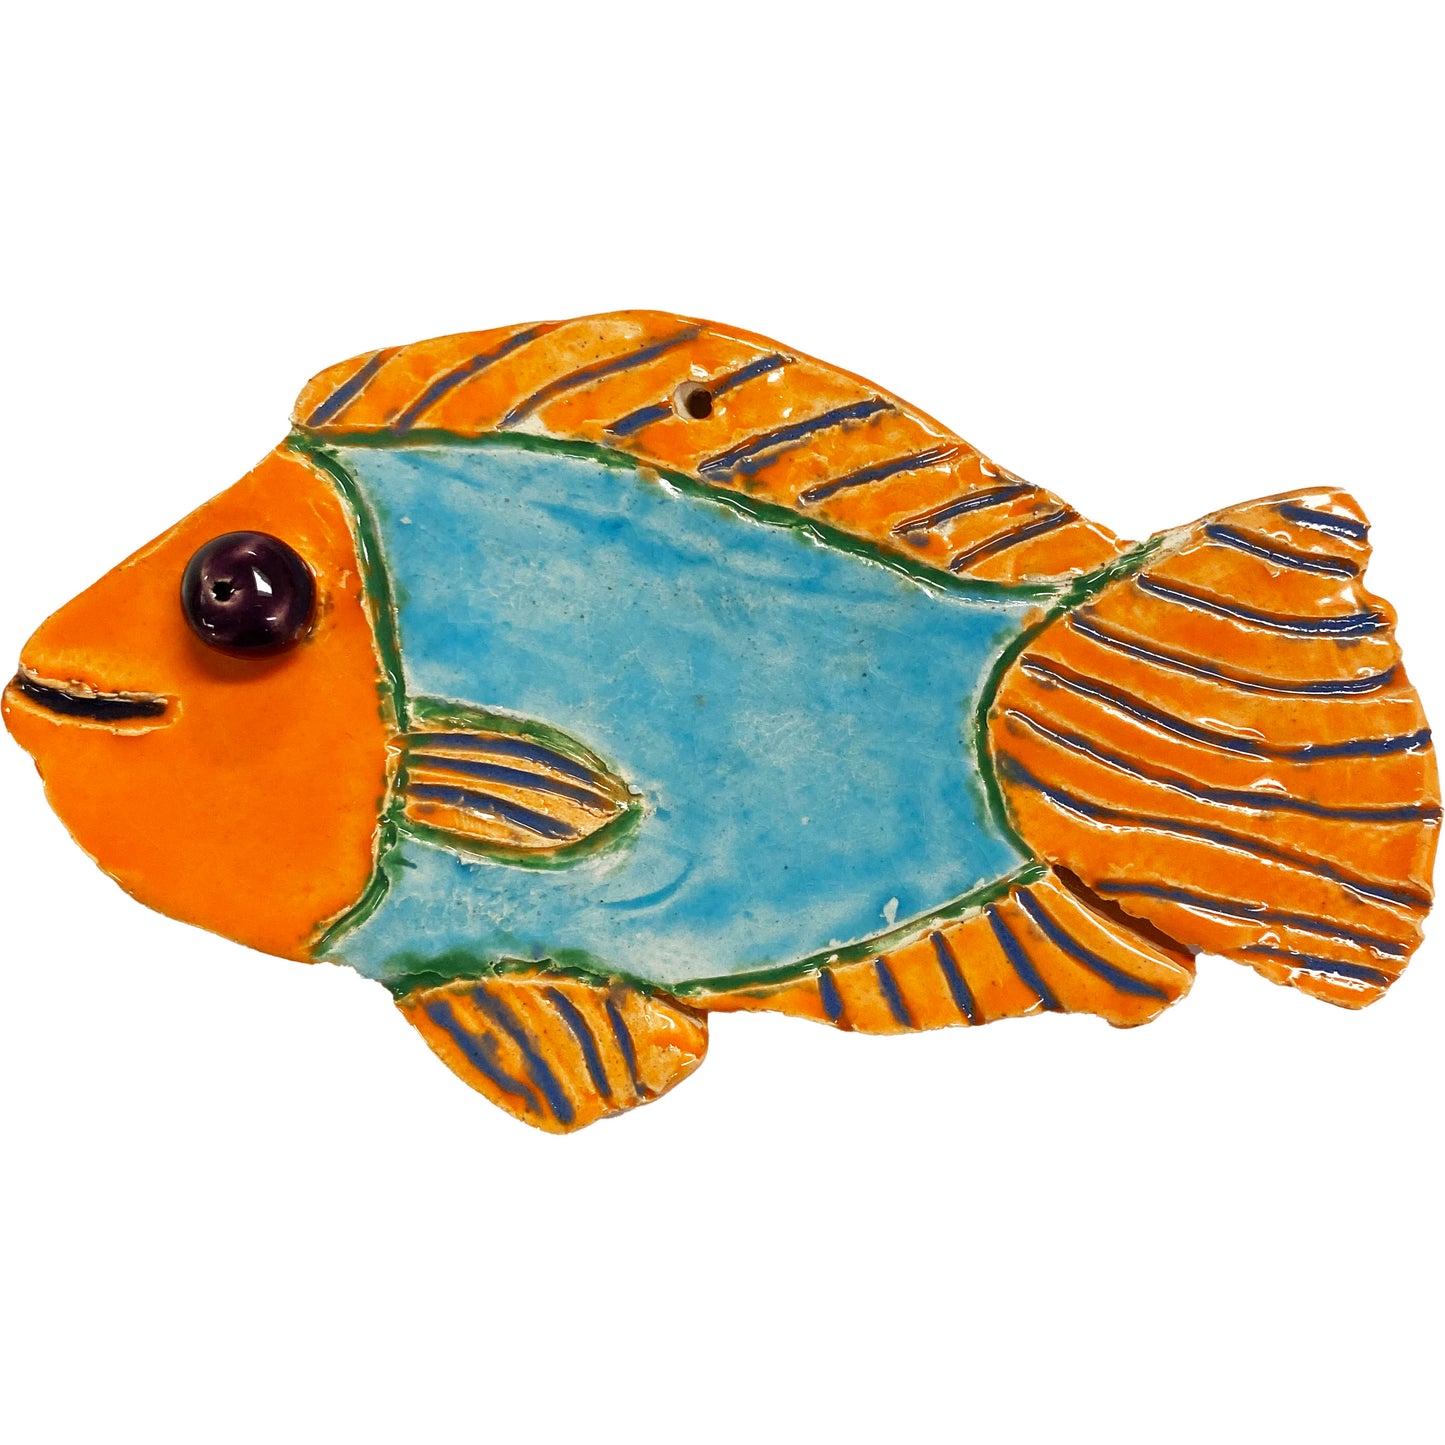 Ceramic Arts Handmade Clay Crafts Fresh Fish Glazed 5-inch x 3-inch by Cassandra Richardson